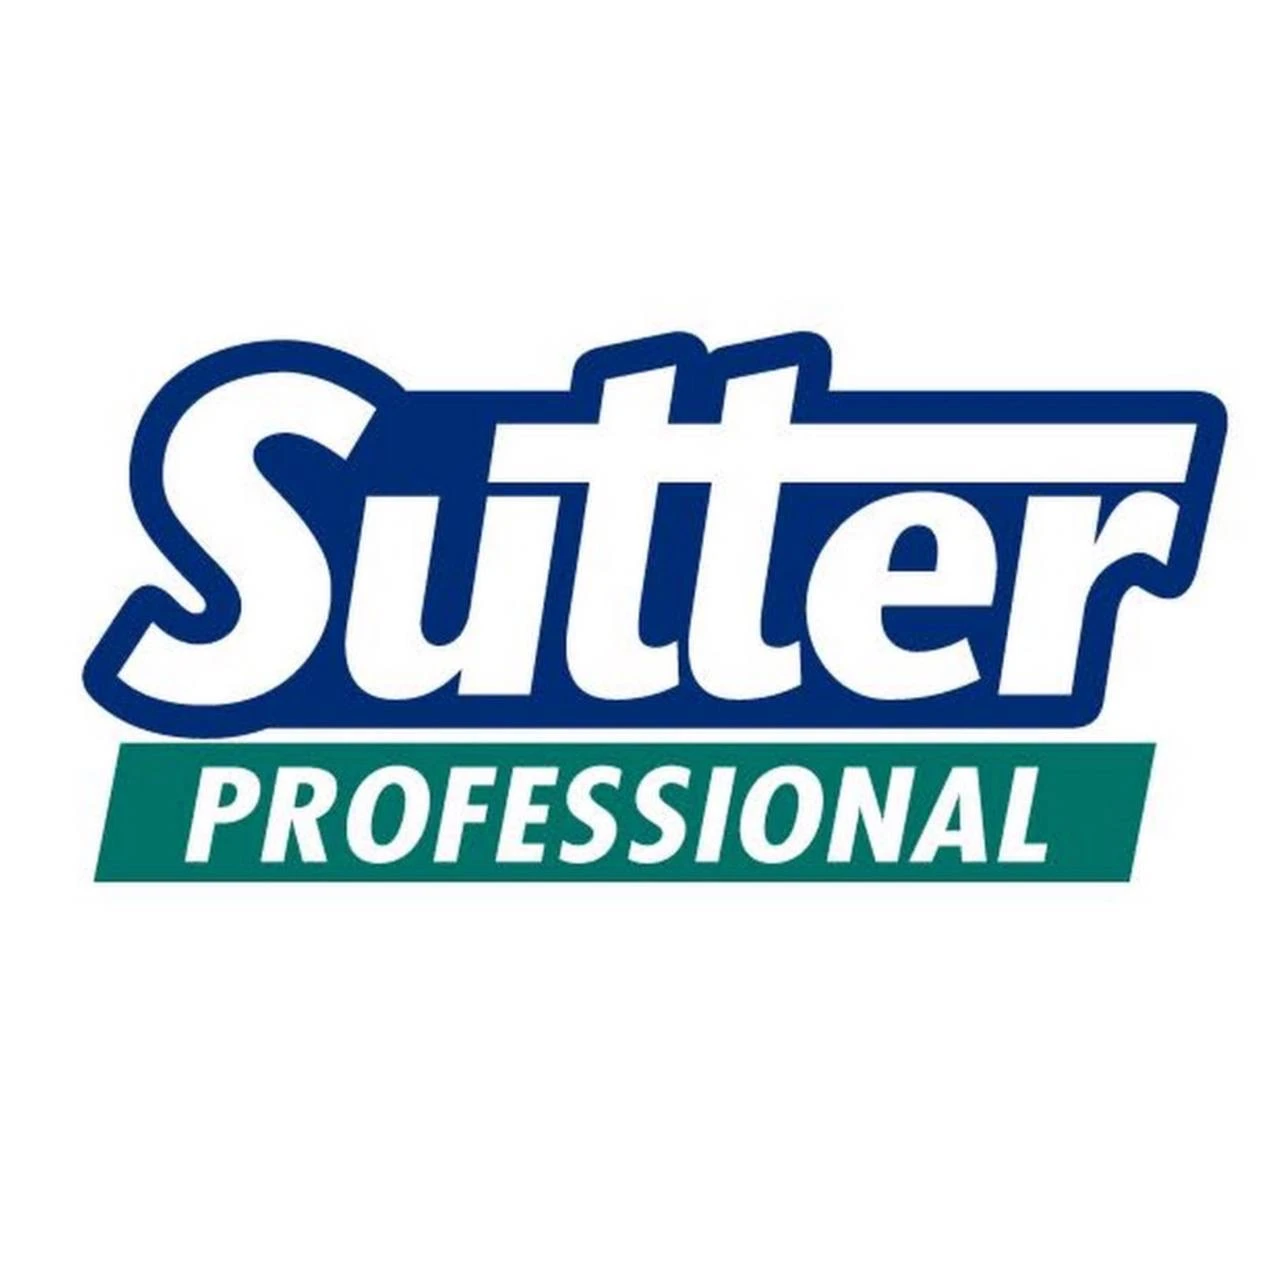 Sutter Professional